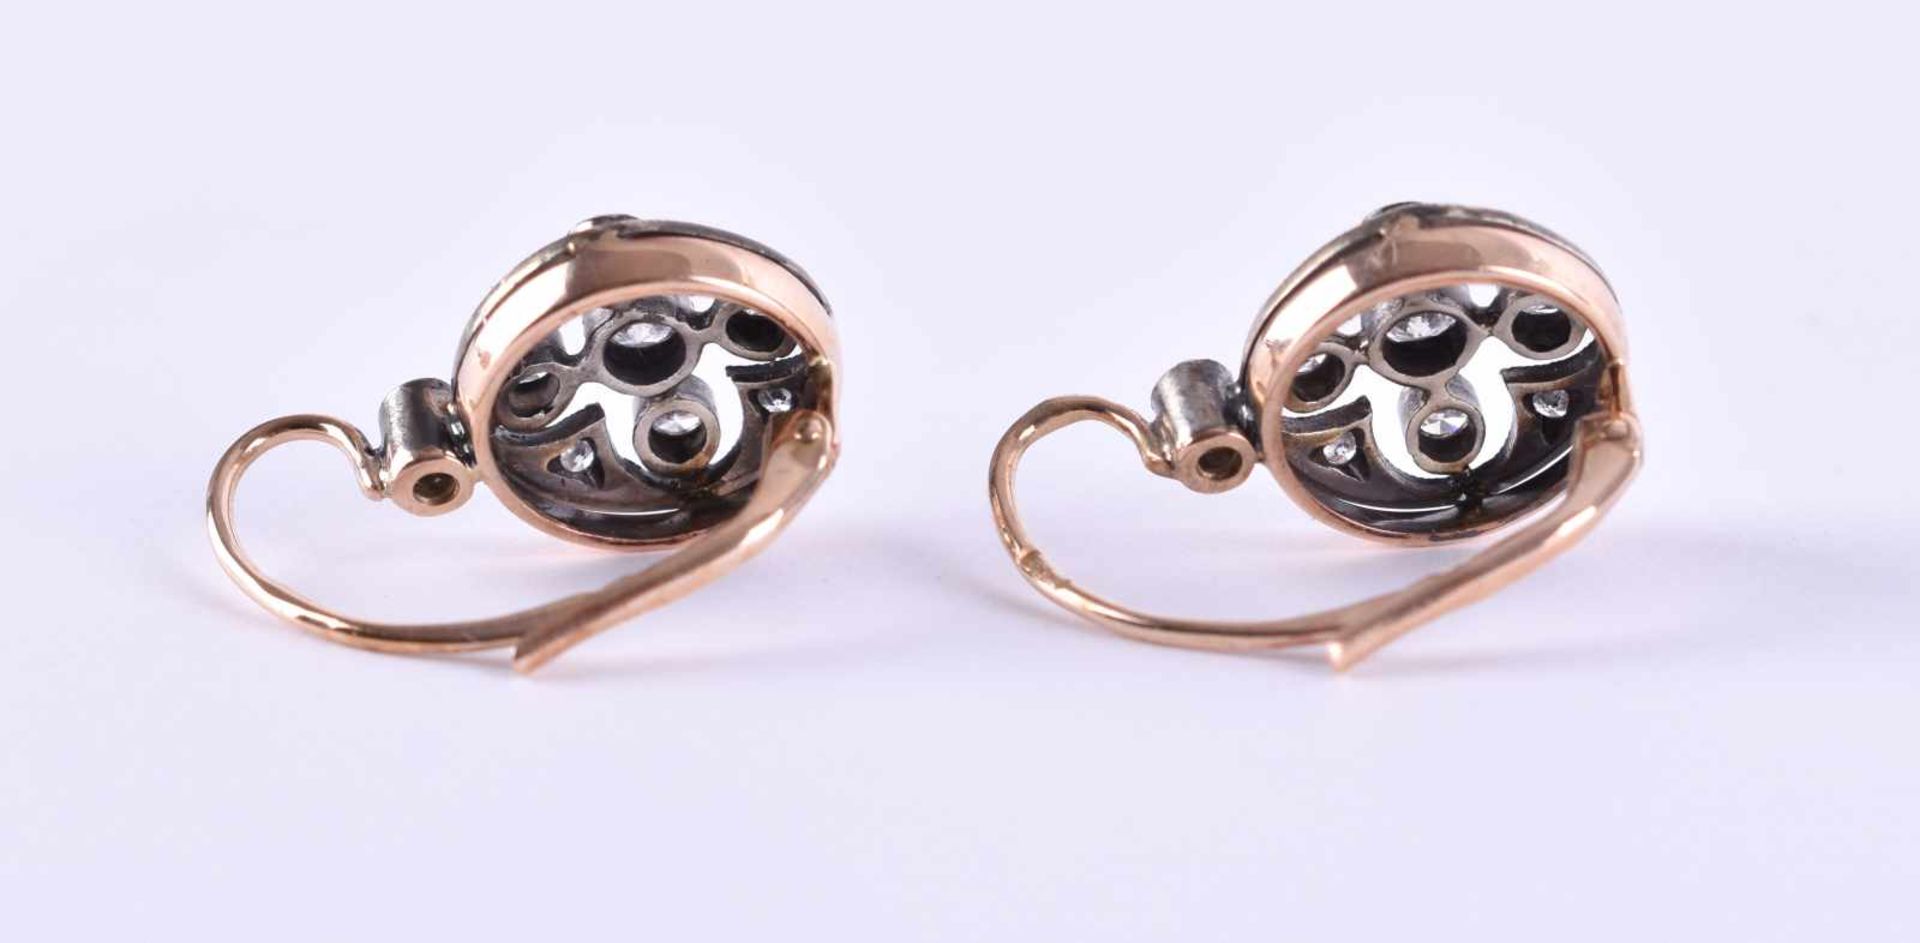 Pair of earrings Russiared gold / white gold 56 Zolotnik, each set with 6 brilliant-cut diamonds - Bild 3 aus 5